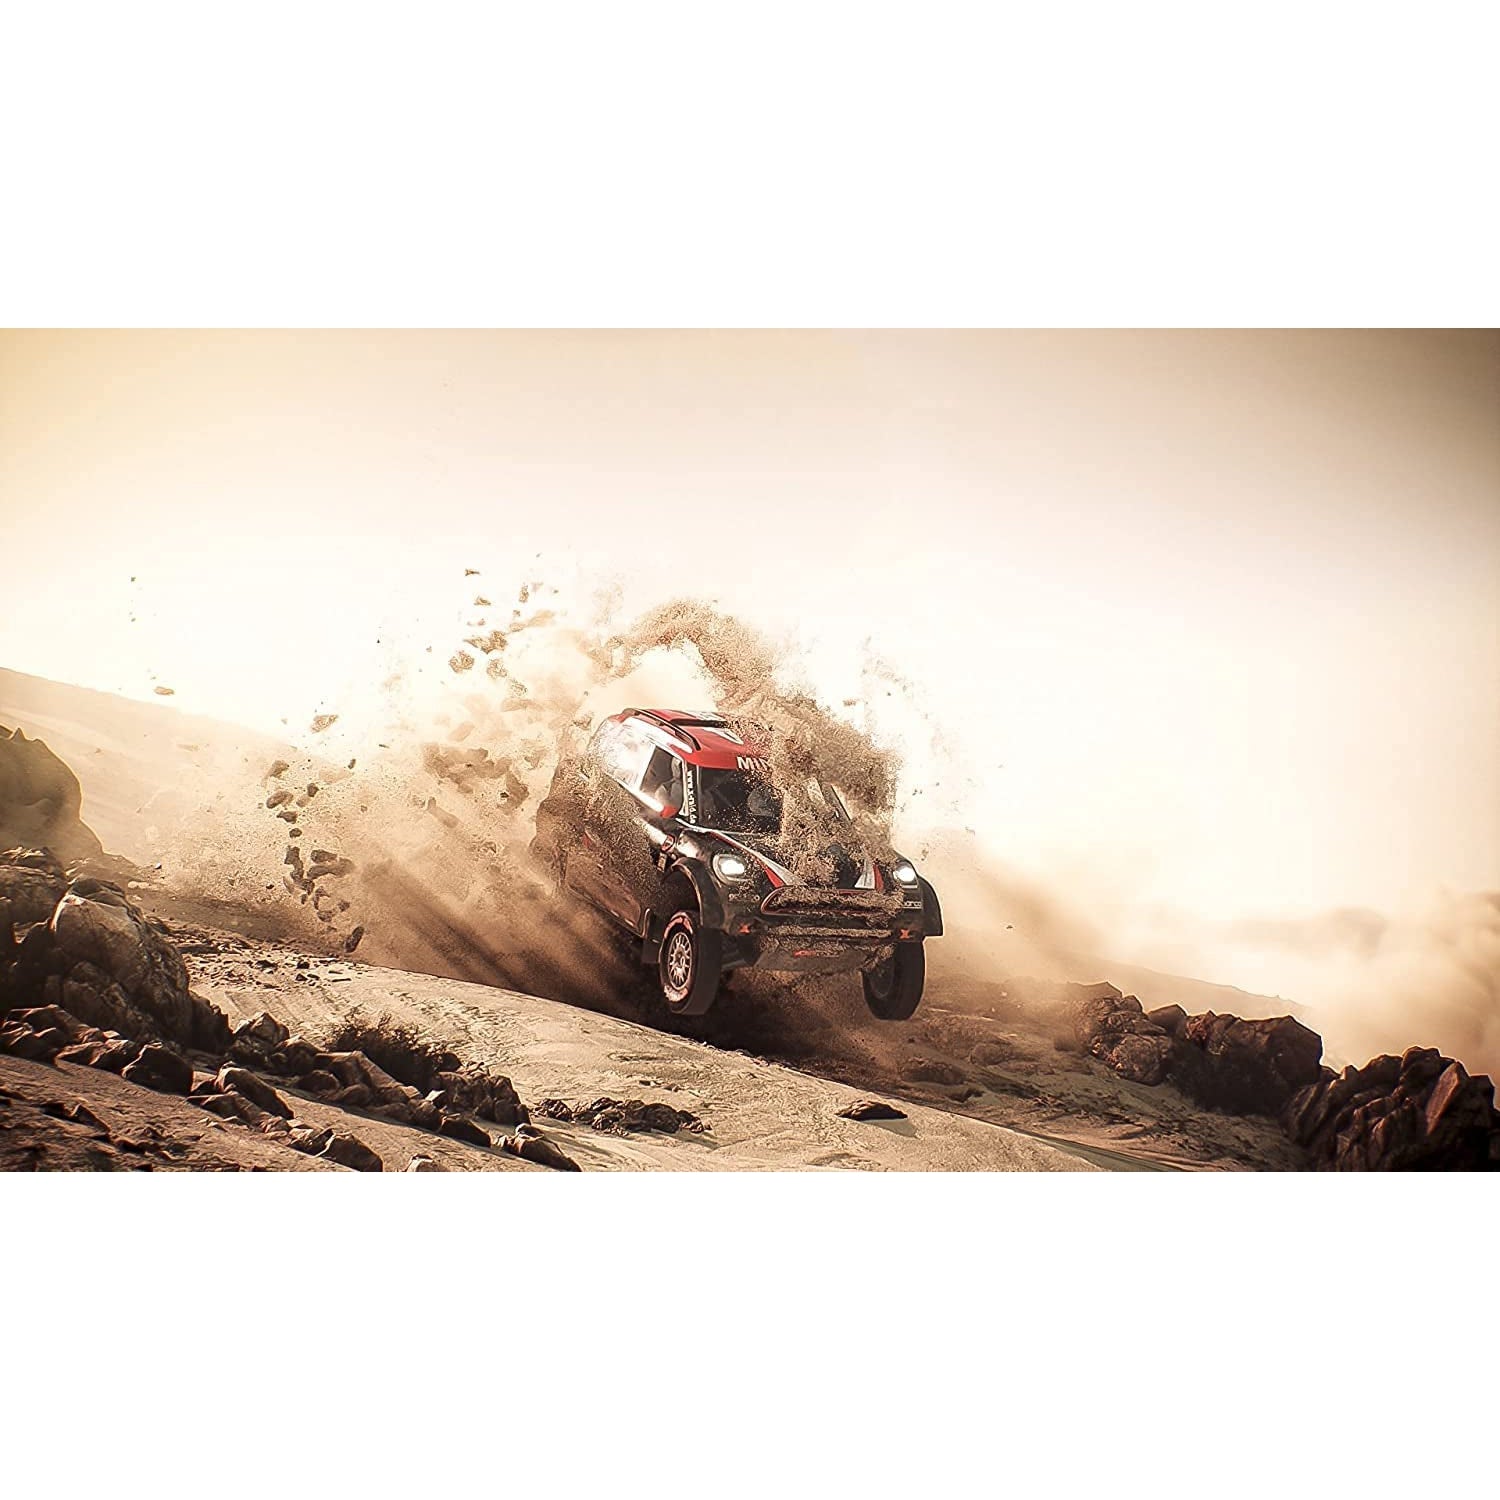 Dakar 18 (PS4)